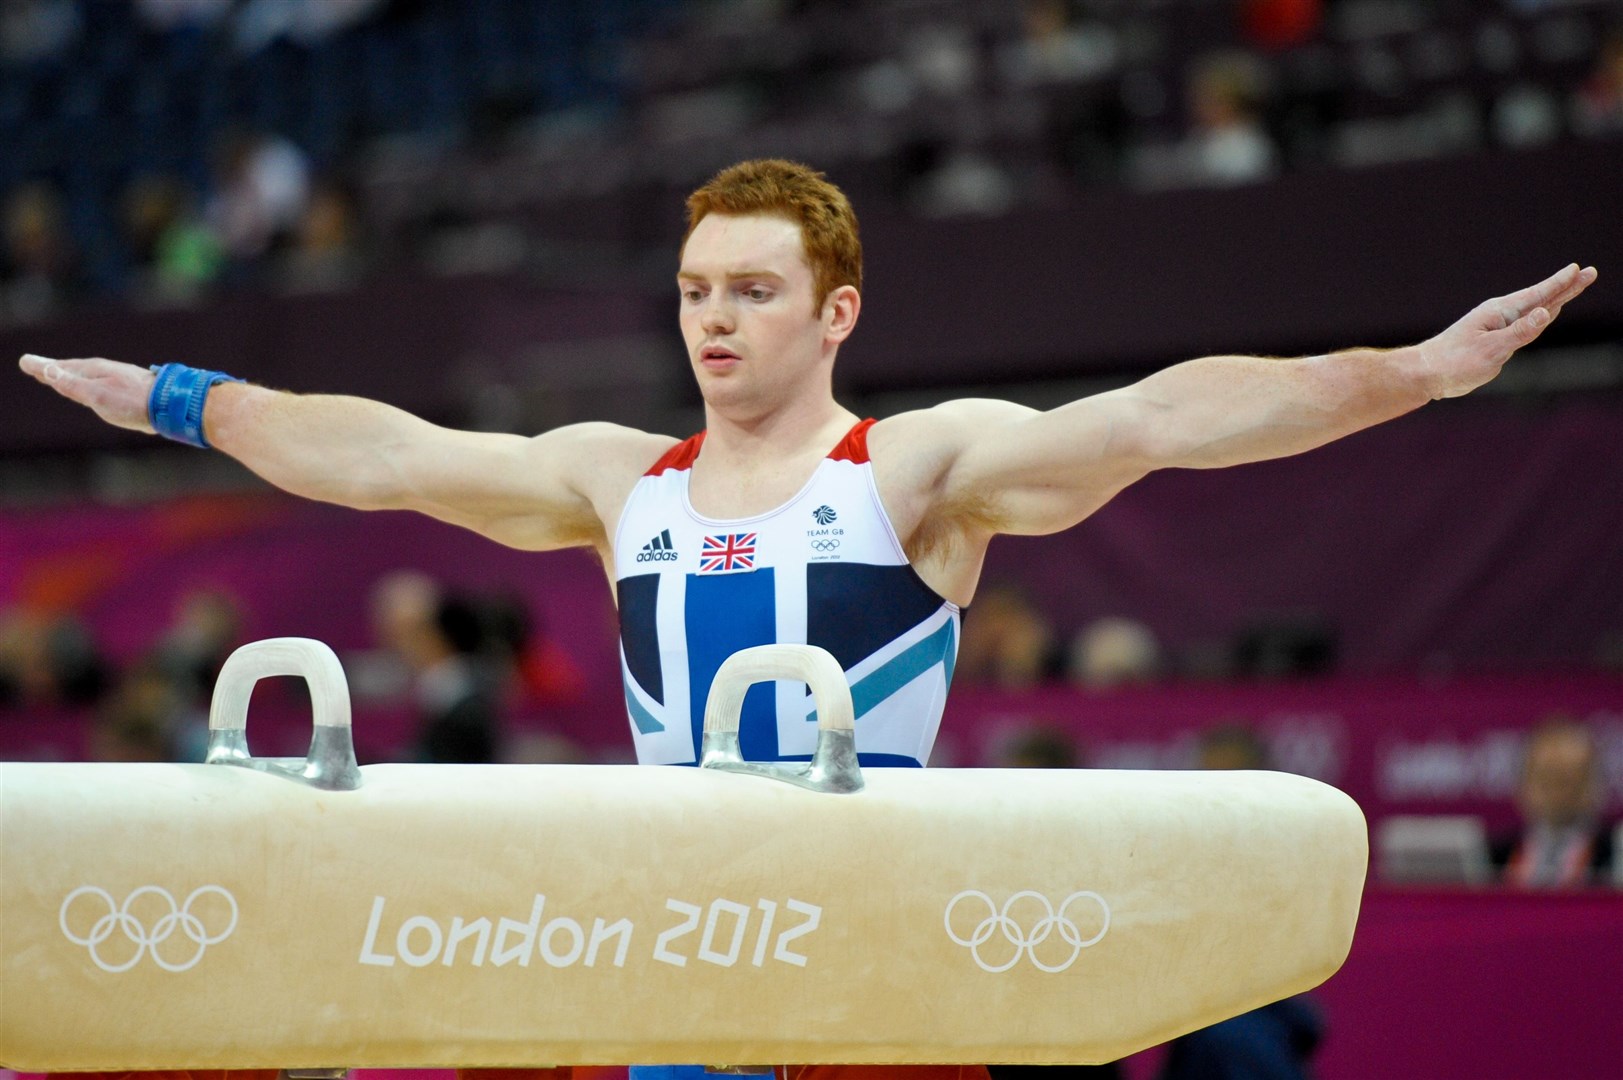 Daniel Purvis won an Olympic bronze at London 2012.